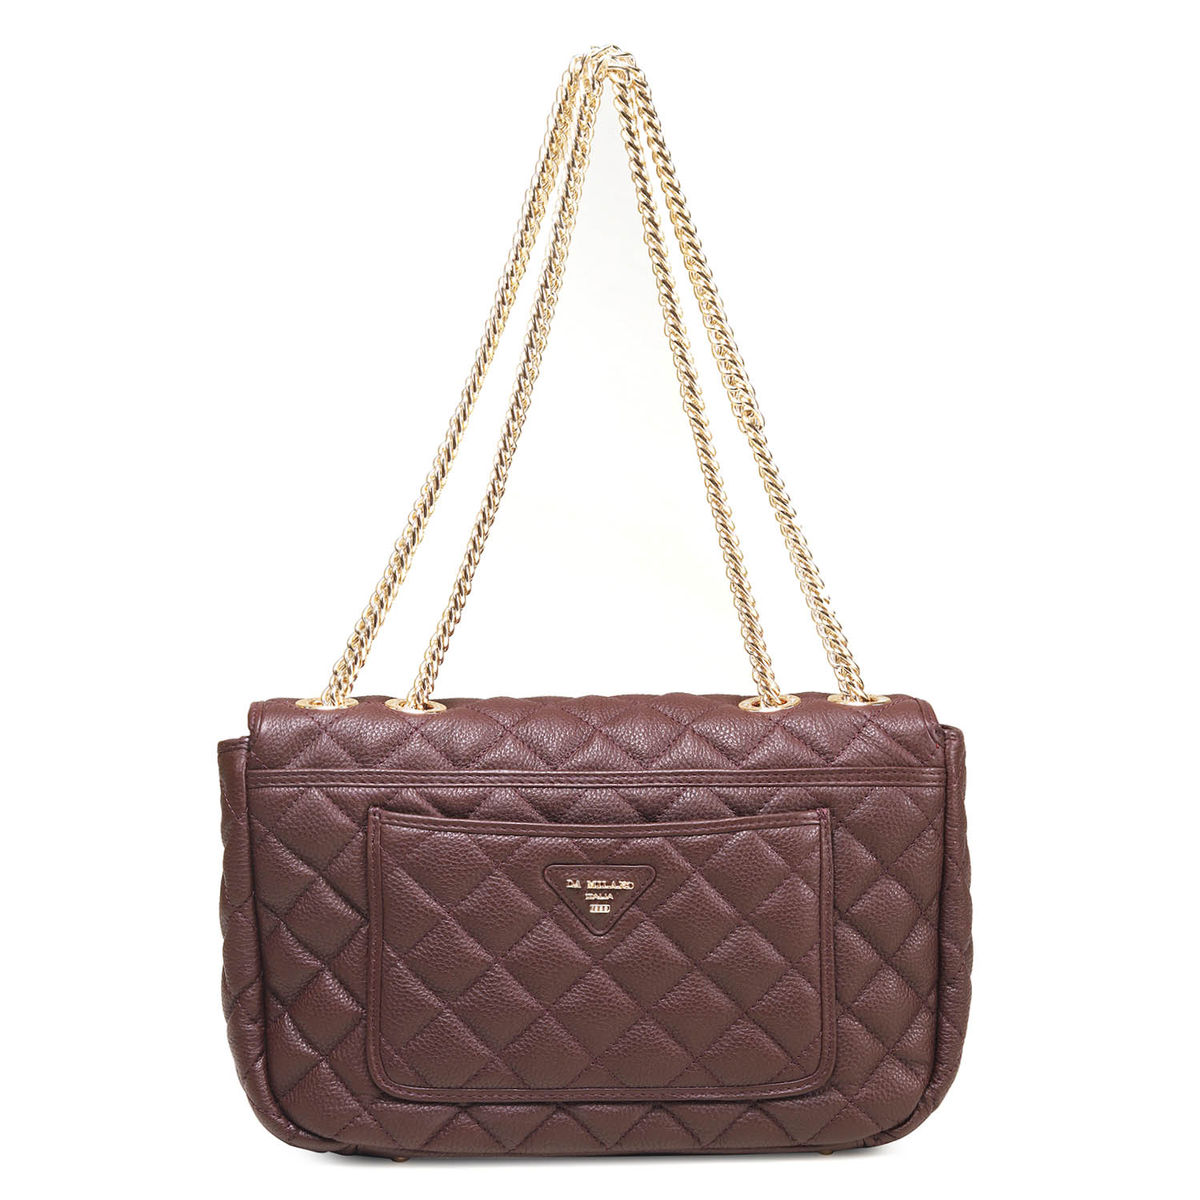 donna karan handbags